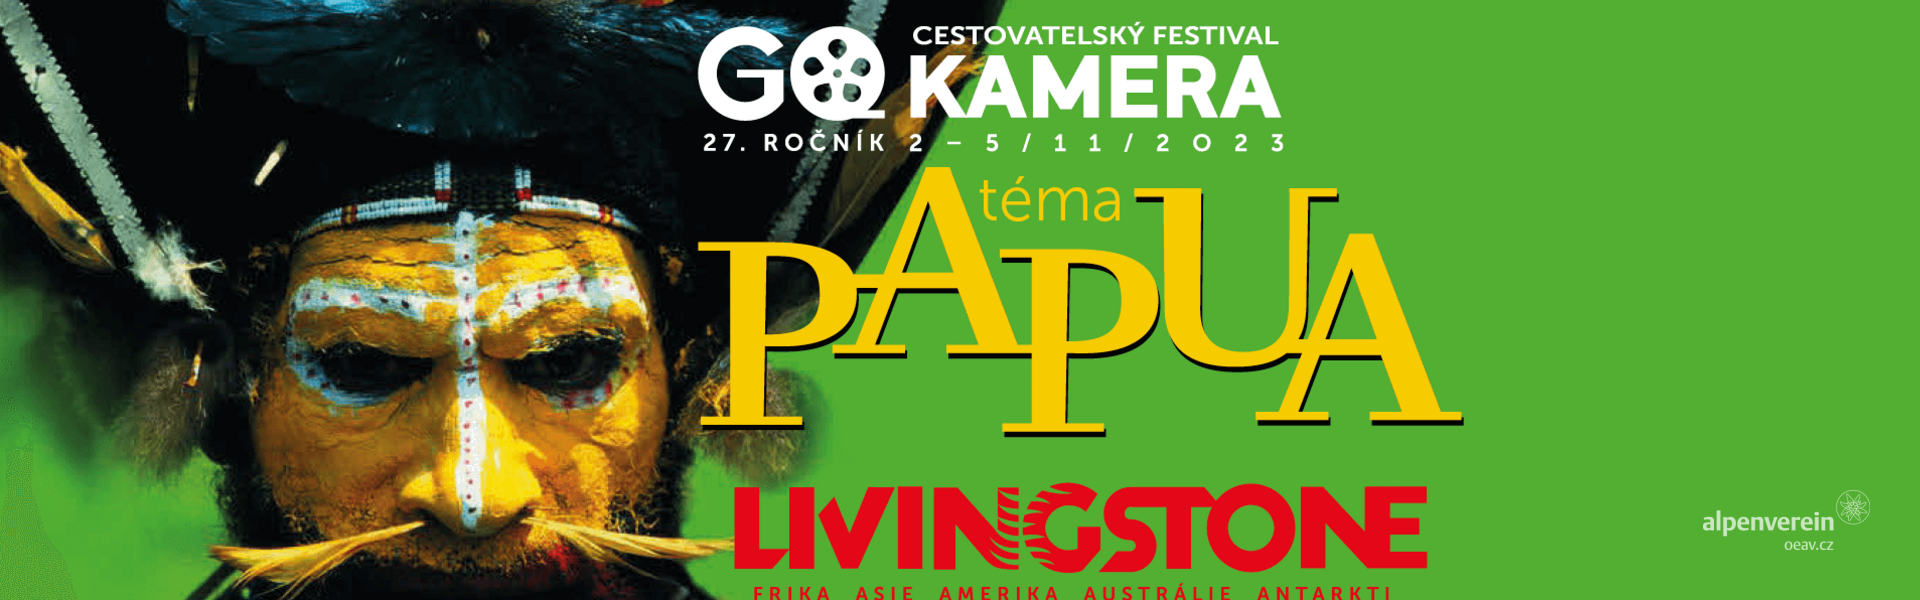 Gokamera cestovatelsky festival tema Paua podzim 2023